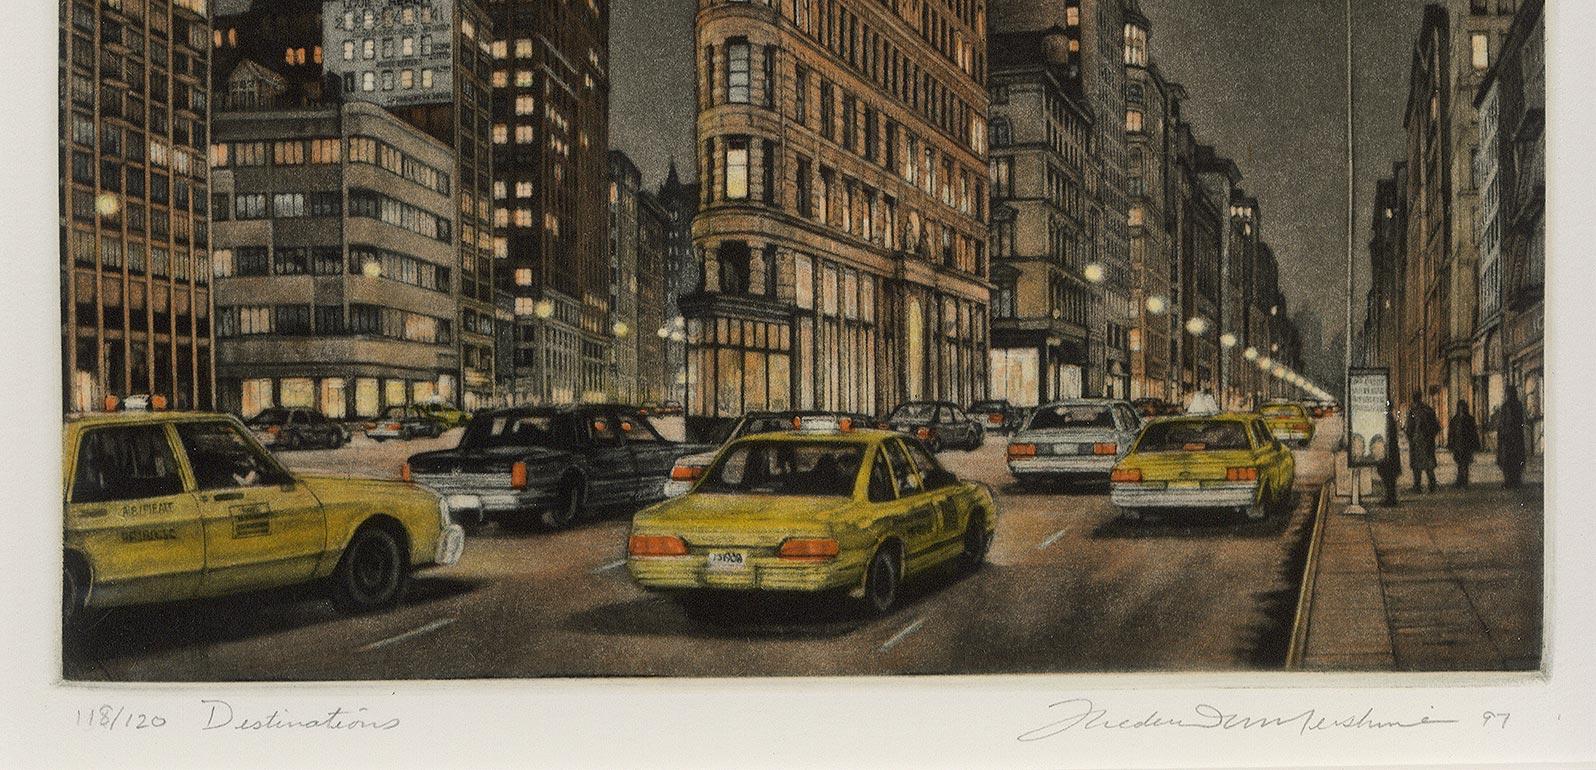 Destinations (Flatiron Bidg, 5th Avenue and Broadway at 23rd Street) - Black Landscape Print by Frederick Mershimer